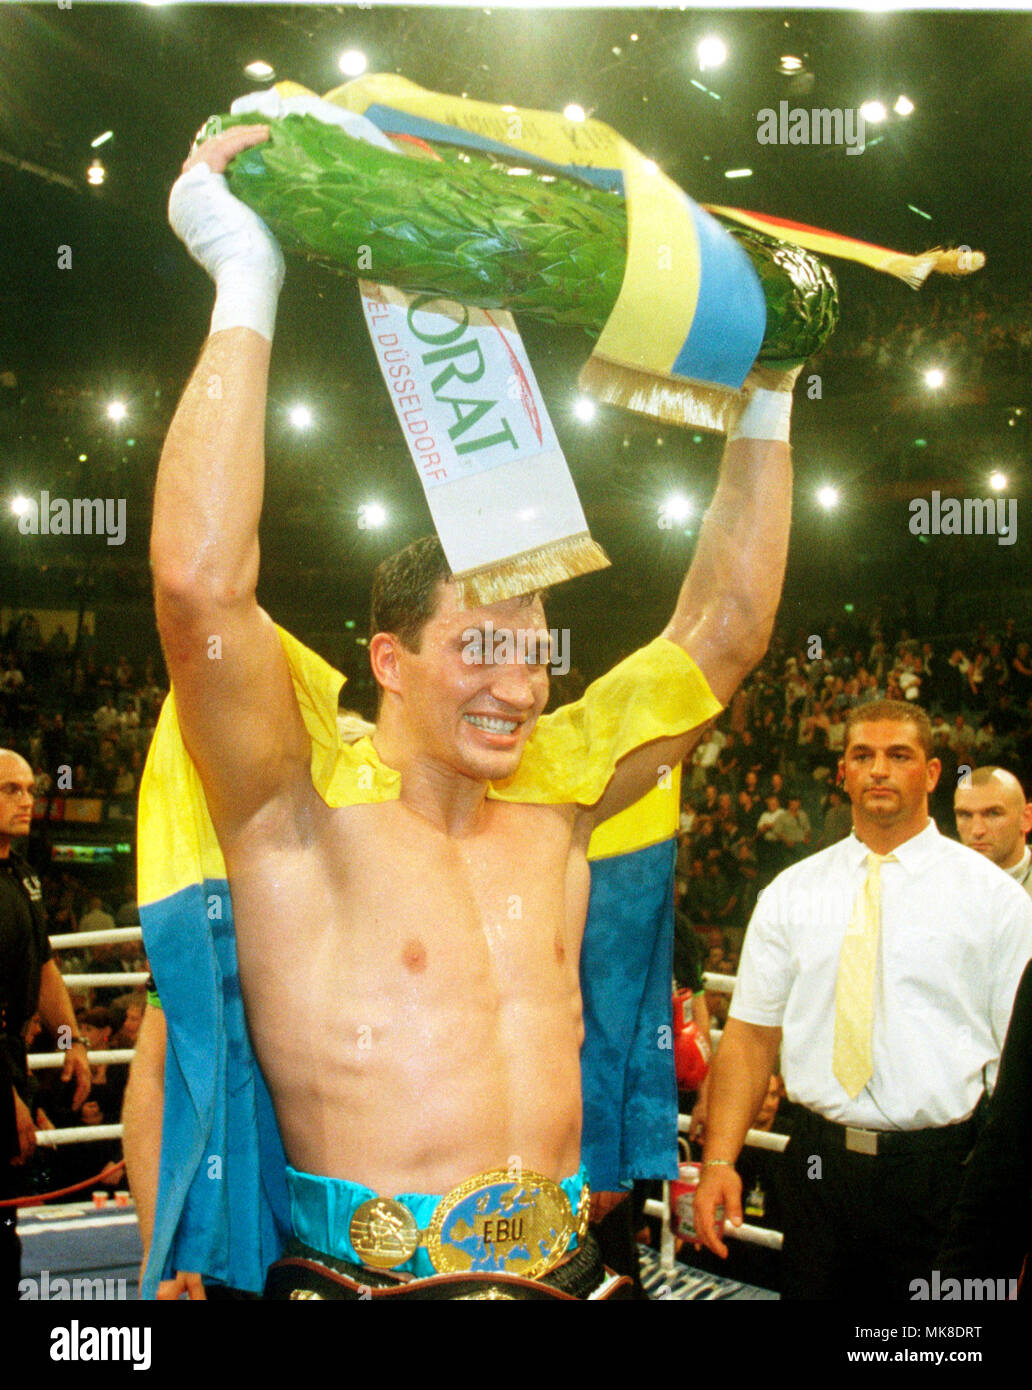 Boxing: Kšln Arena Cologne Germany 25.9.1999, EBU European Championship fight Axel Schulz (GER) vs Wladimir Klitschko (UKR) --- Wladimir Klitschko raises the victory laurel wreath Stock Photo